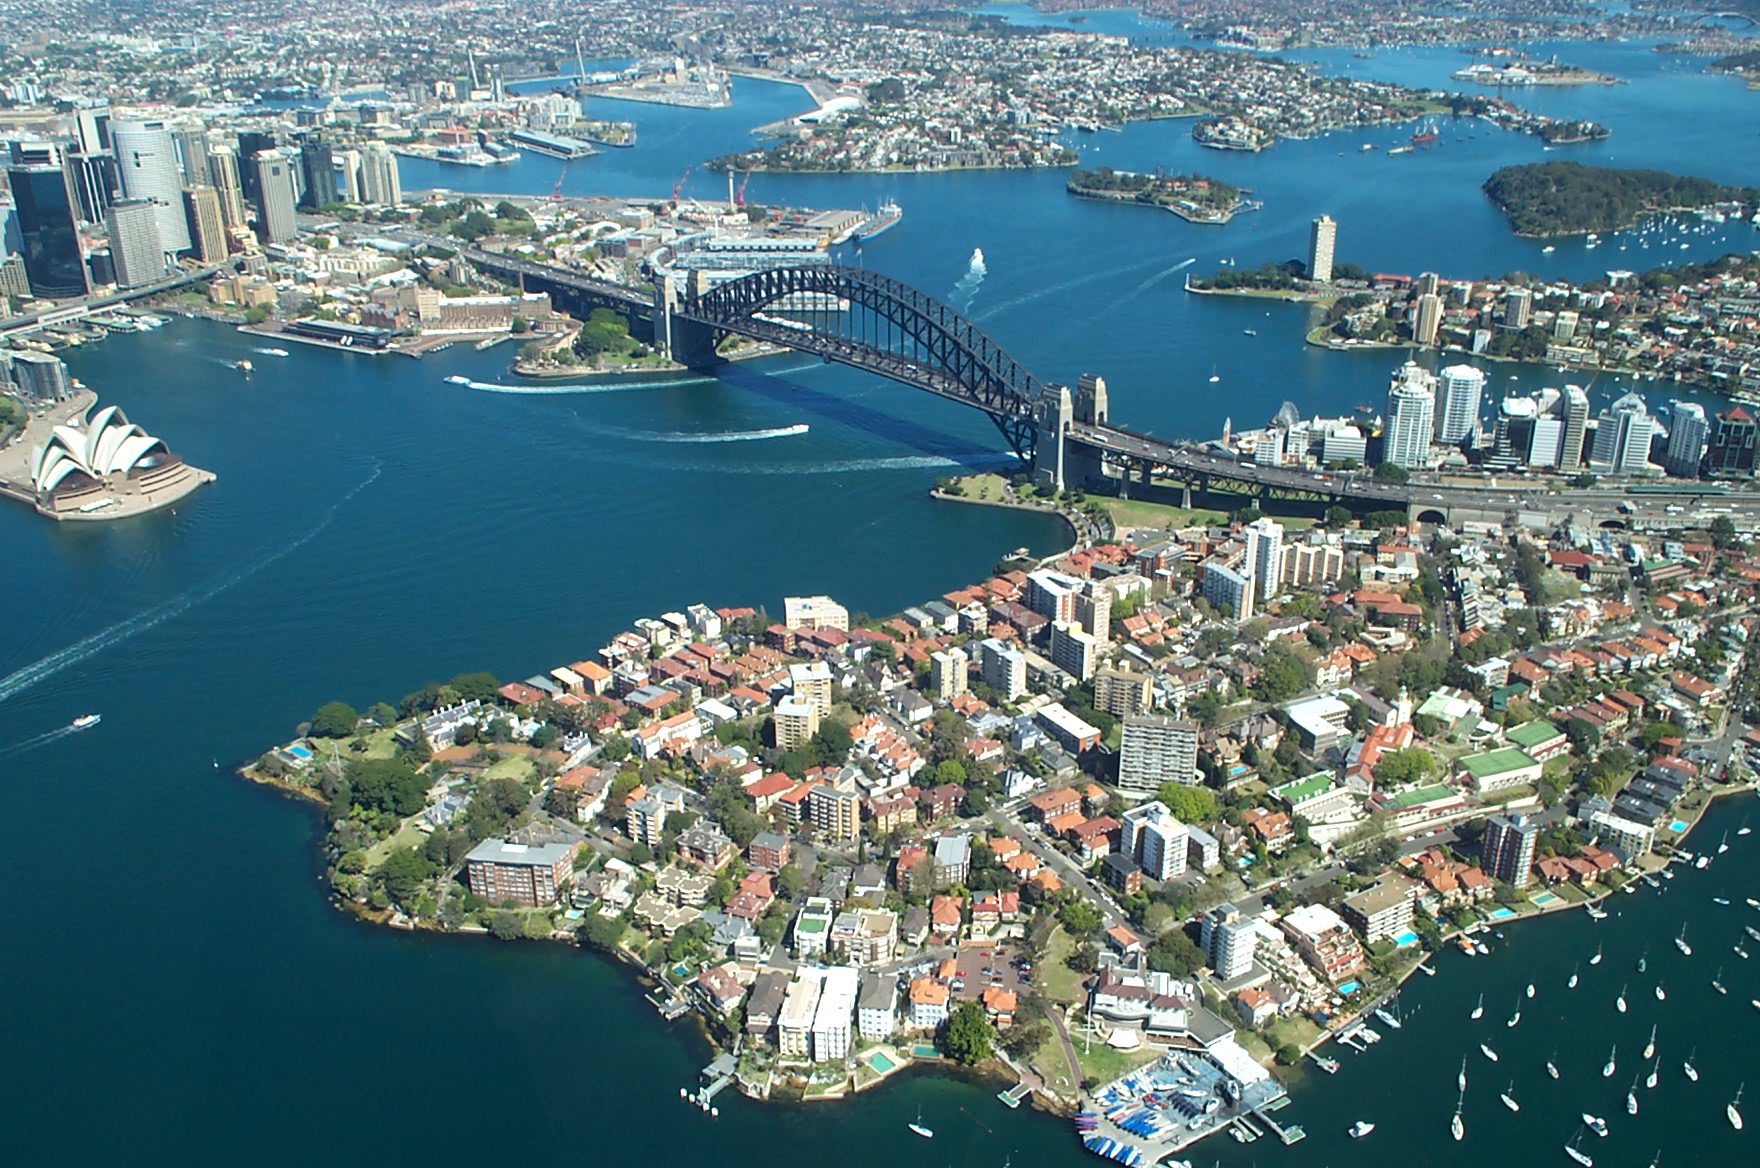 Sydney_Harbour_Bridge_from_the_air.JPG